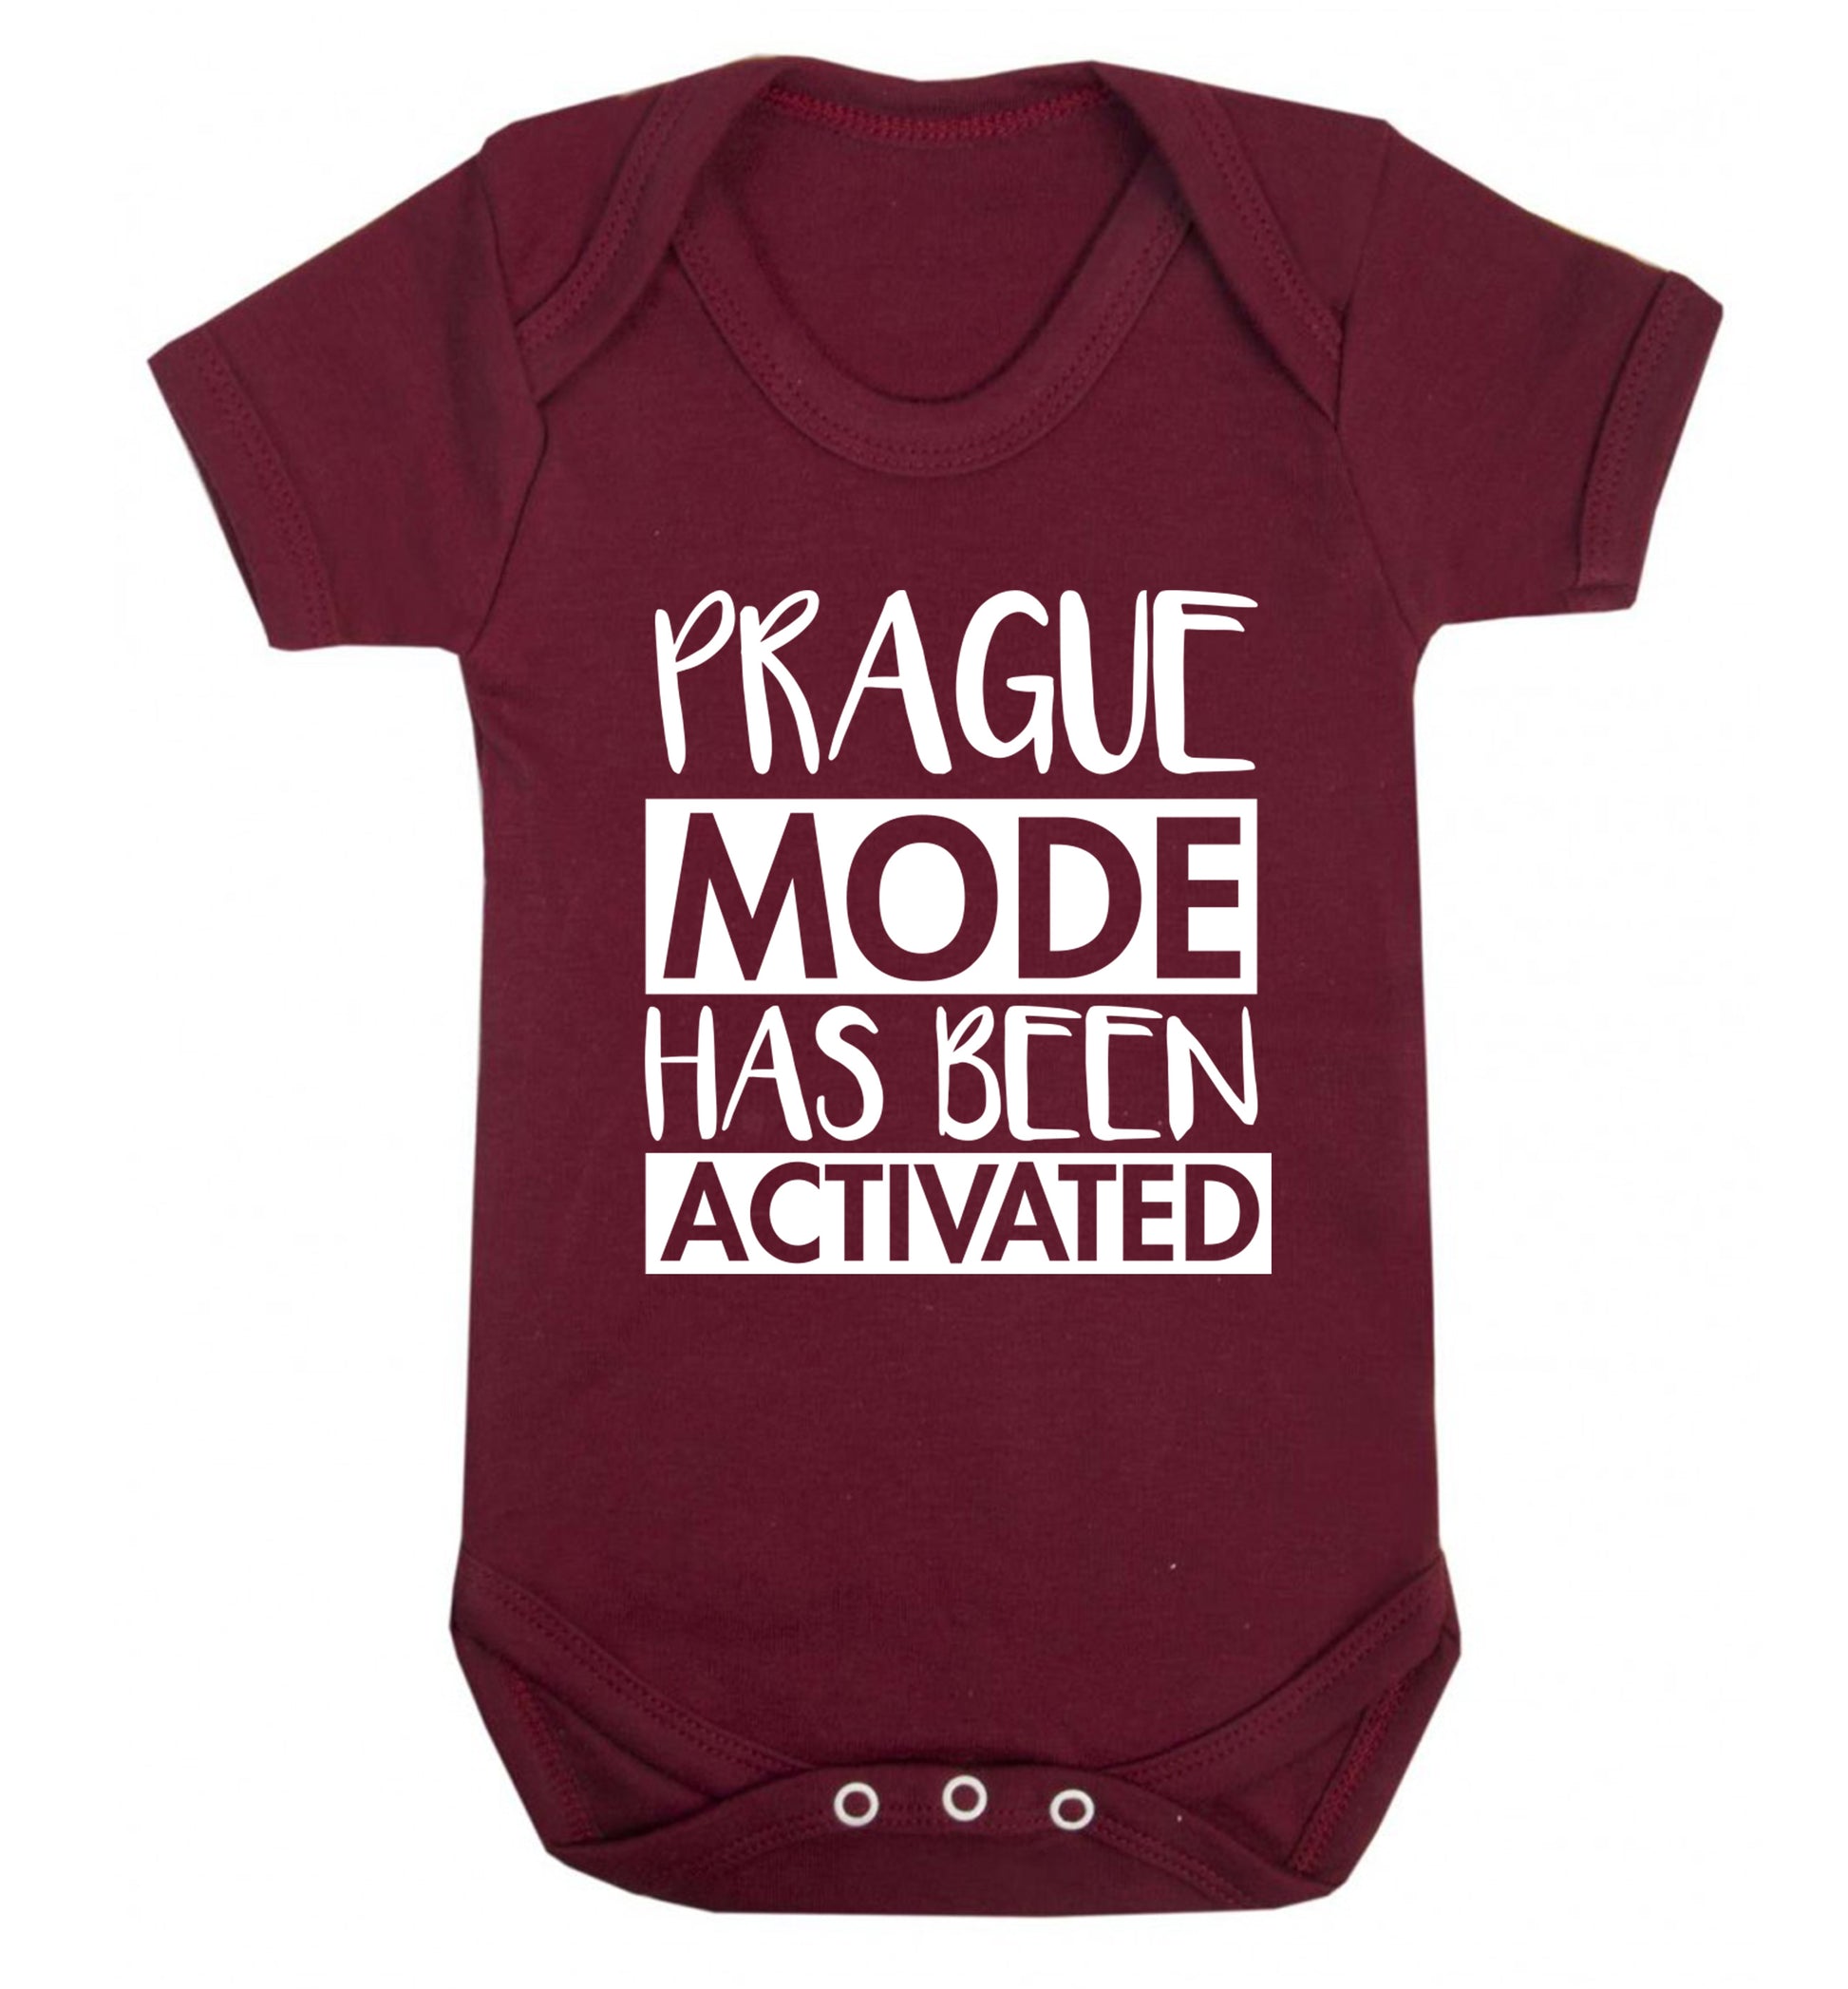 Prague mode has been activated Baby Vest maroon 18-24 months